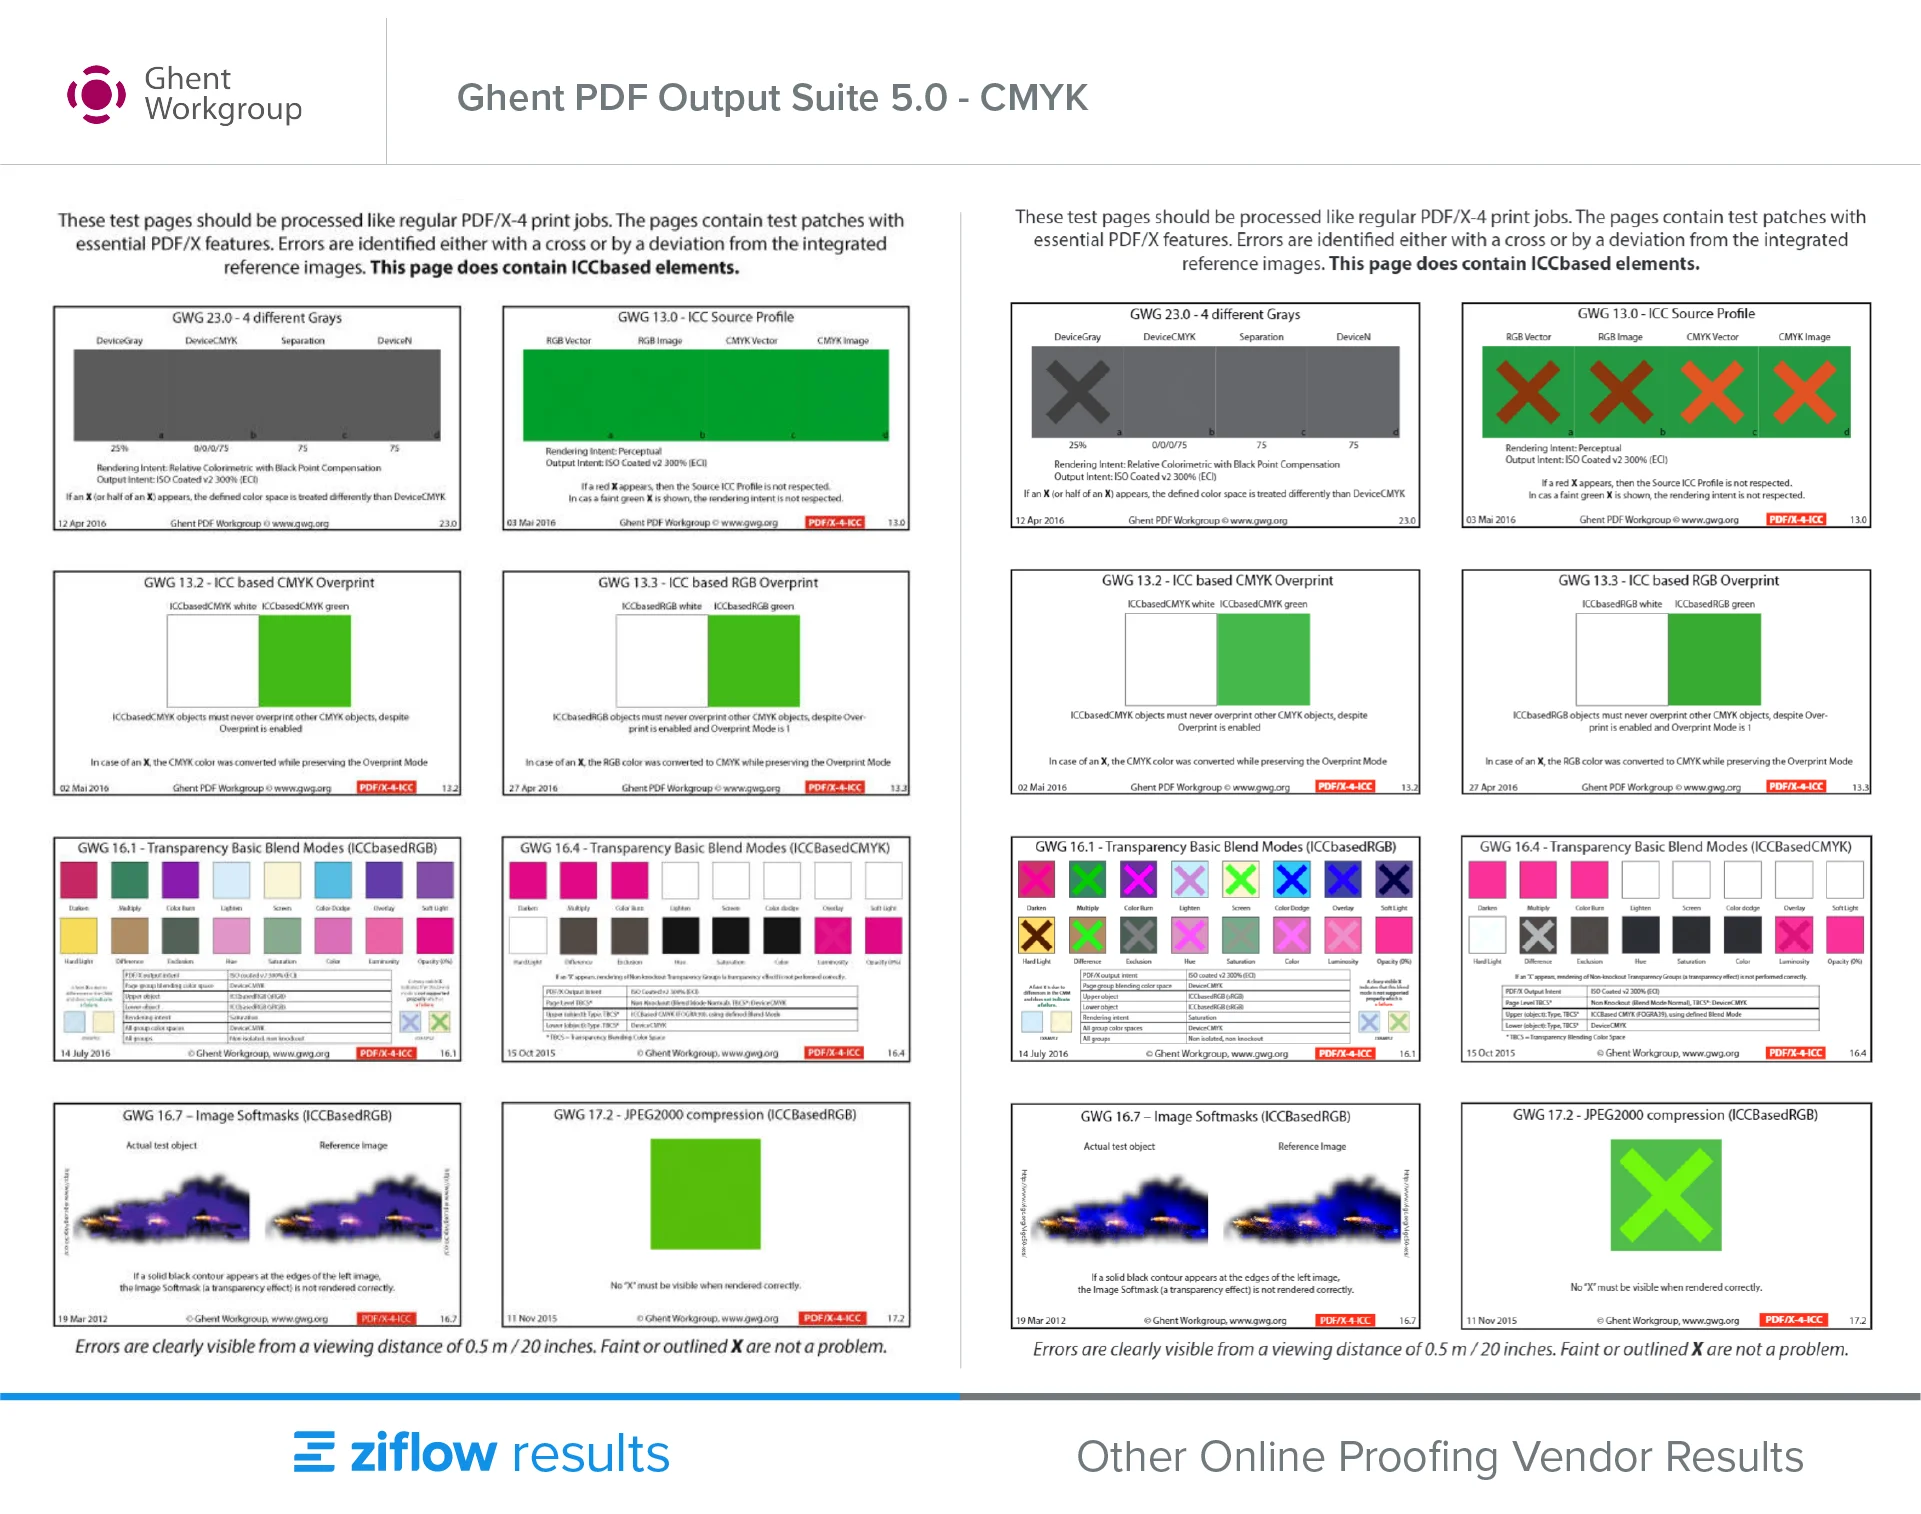 ghent output suite pdf cmyk - other online proofing vendor results 